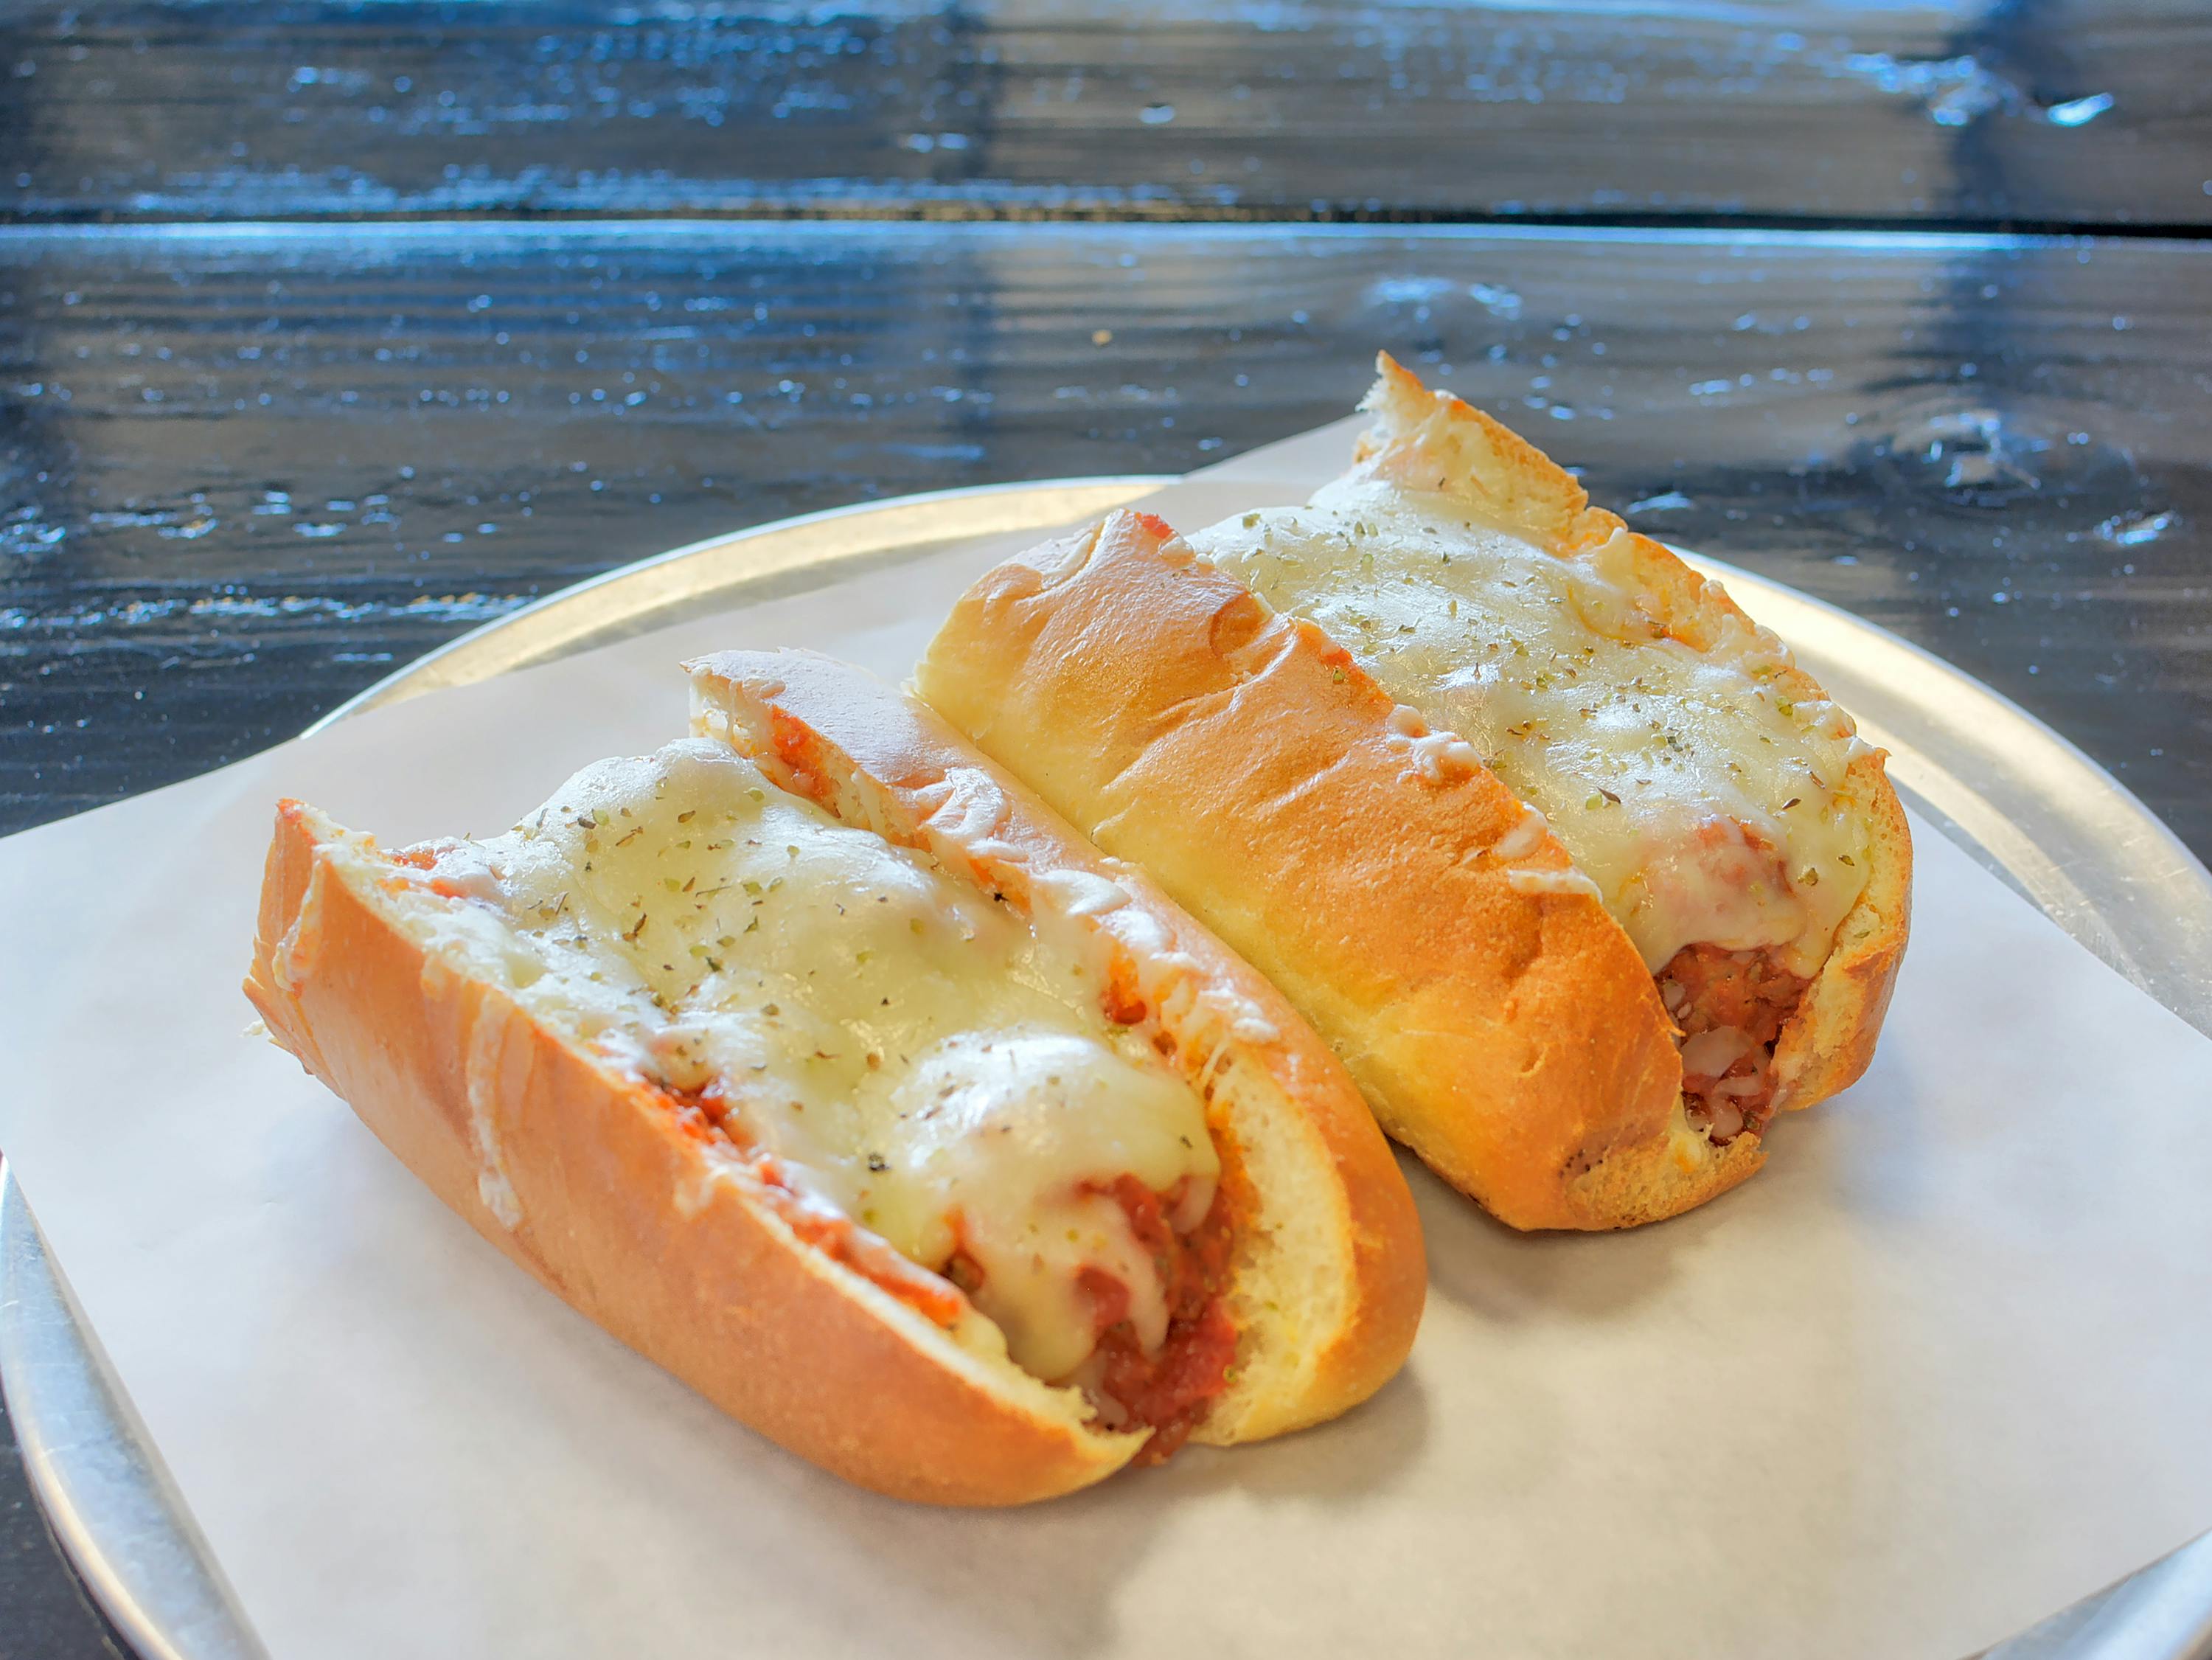 5. Meatball Hot Sub Sandwich from Pacific Pizza - Pomerado Rd in Poway, CA